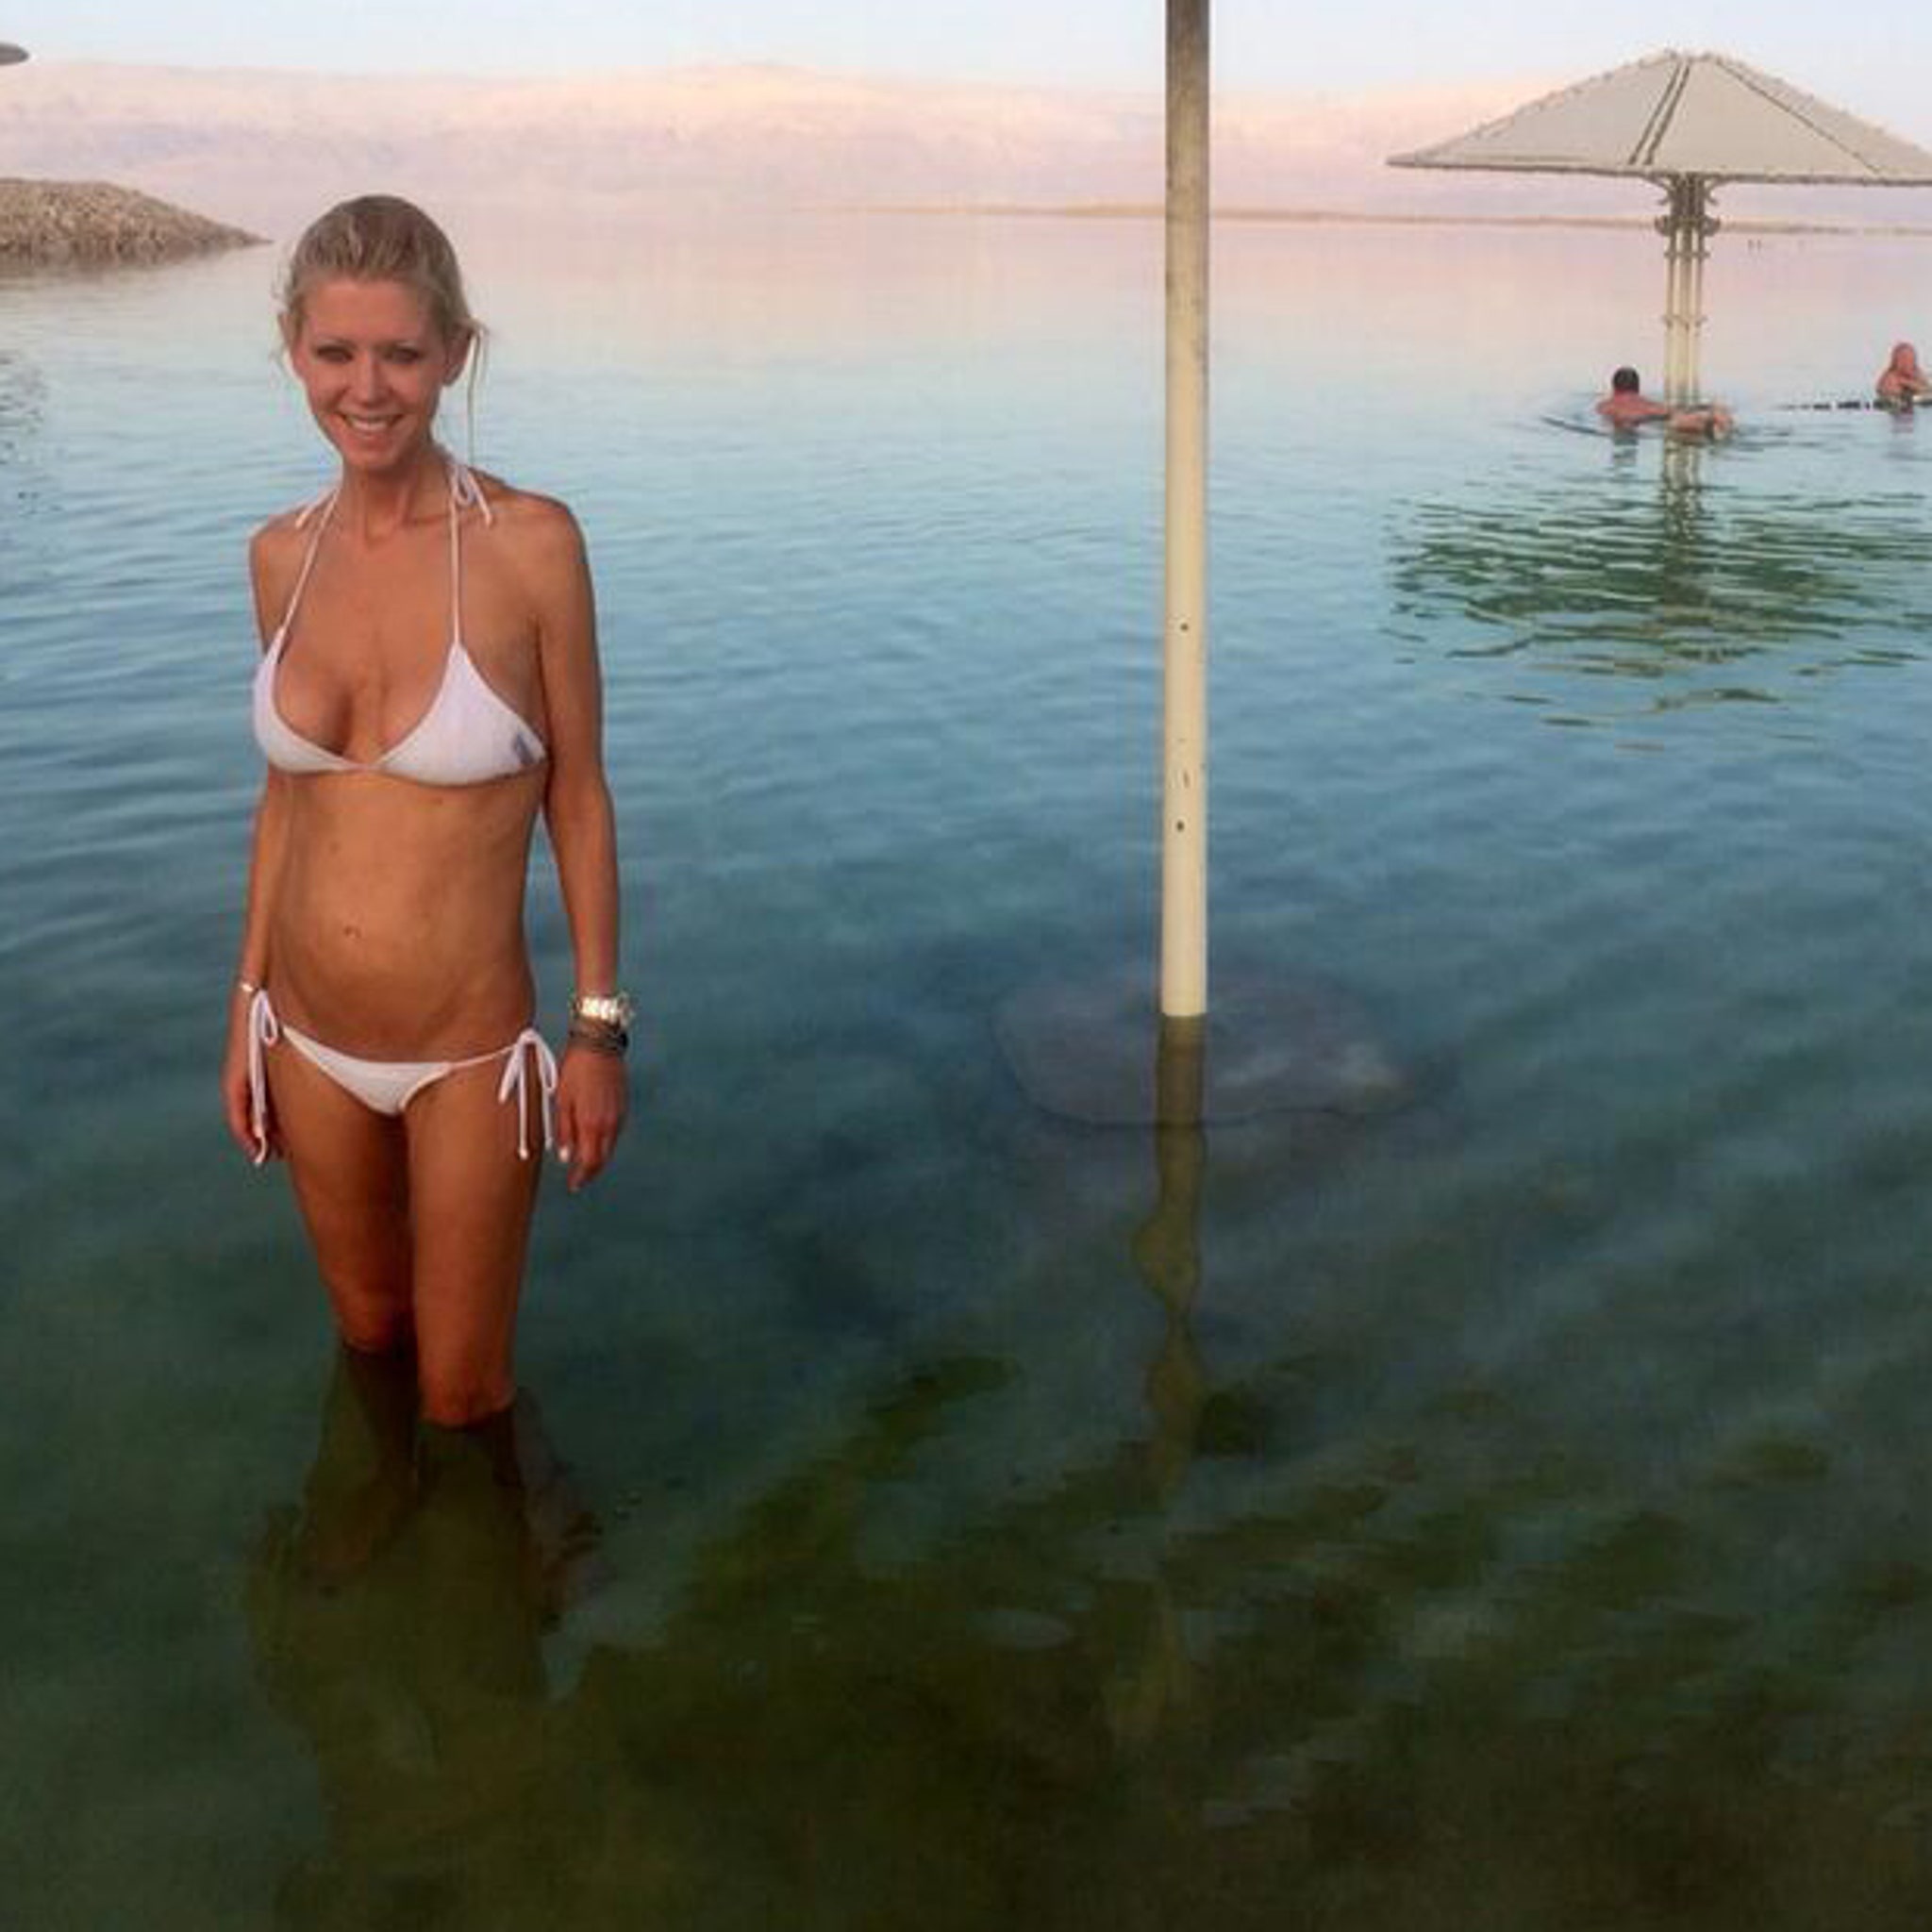 Beschikbaar Spit Rondlopen Tara Reid Posts Vacation Bikini Pic -- See Her Beach Bod!